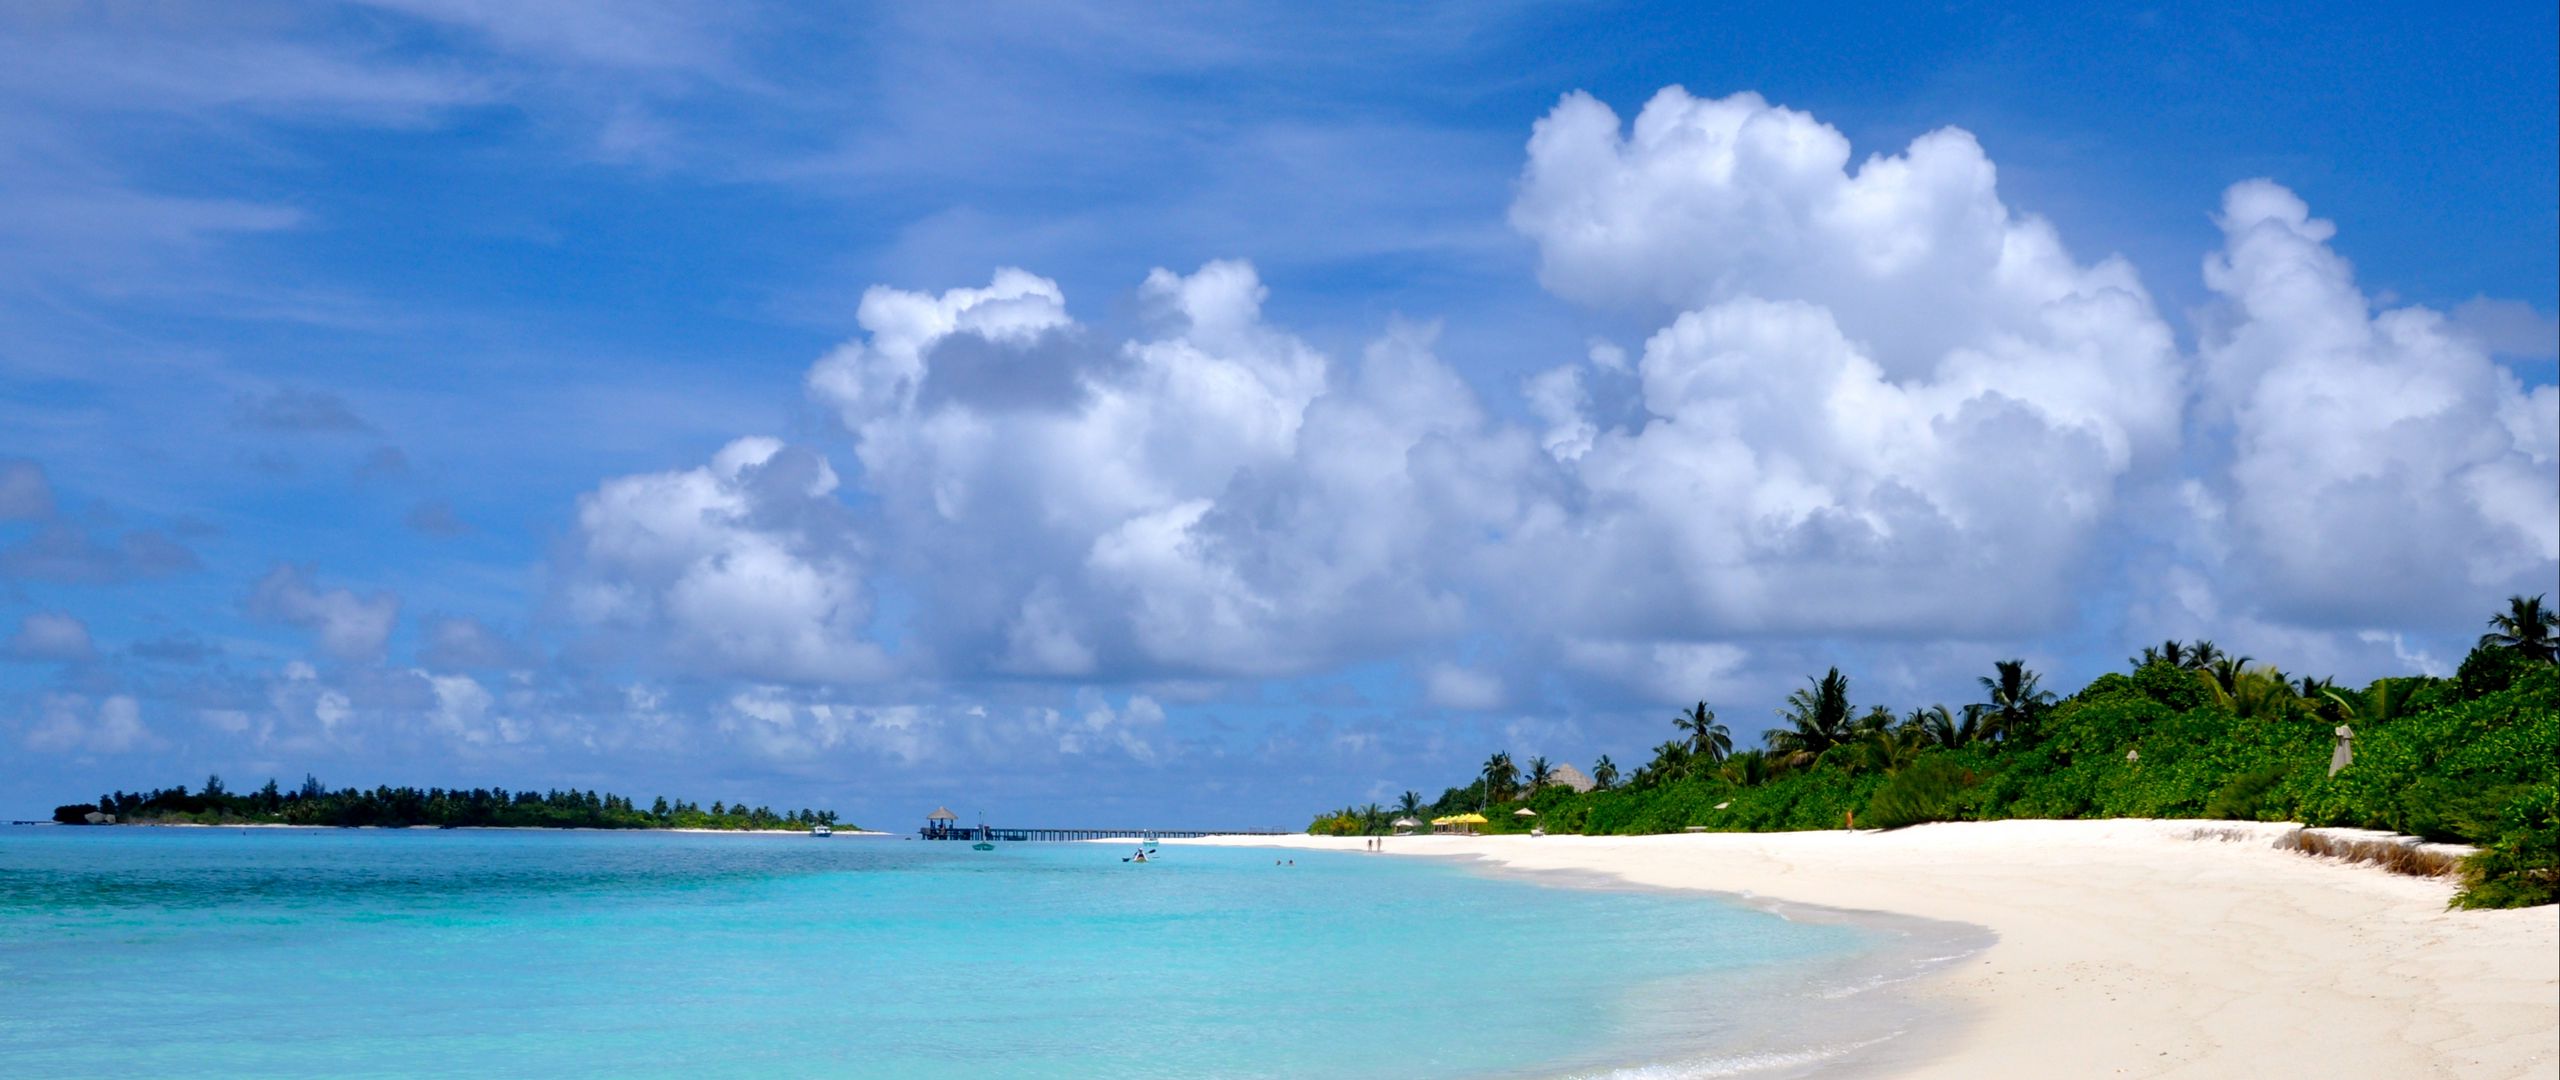 Download wallpaper 2560x1080 maldives, beach, sand, summer dual wide 1080p HD background